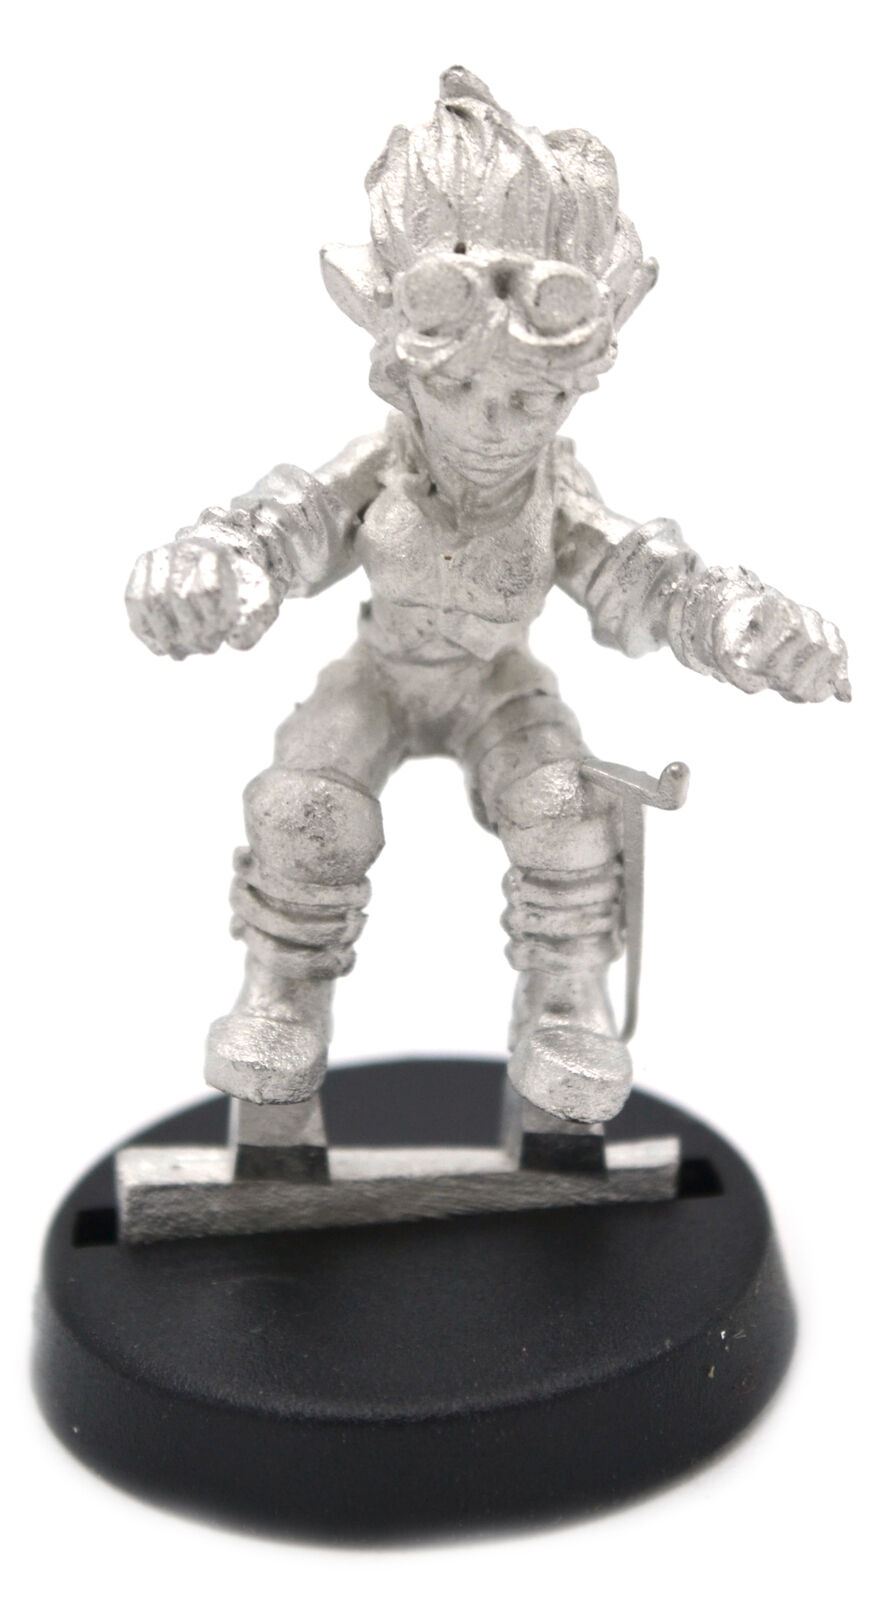 Stonehaven Gnome Titan Pilot Miniature Figure For 28mm-scale Tabletop Wargames